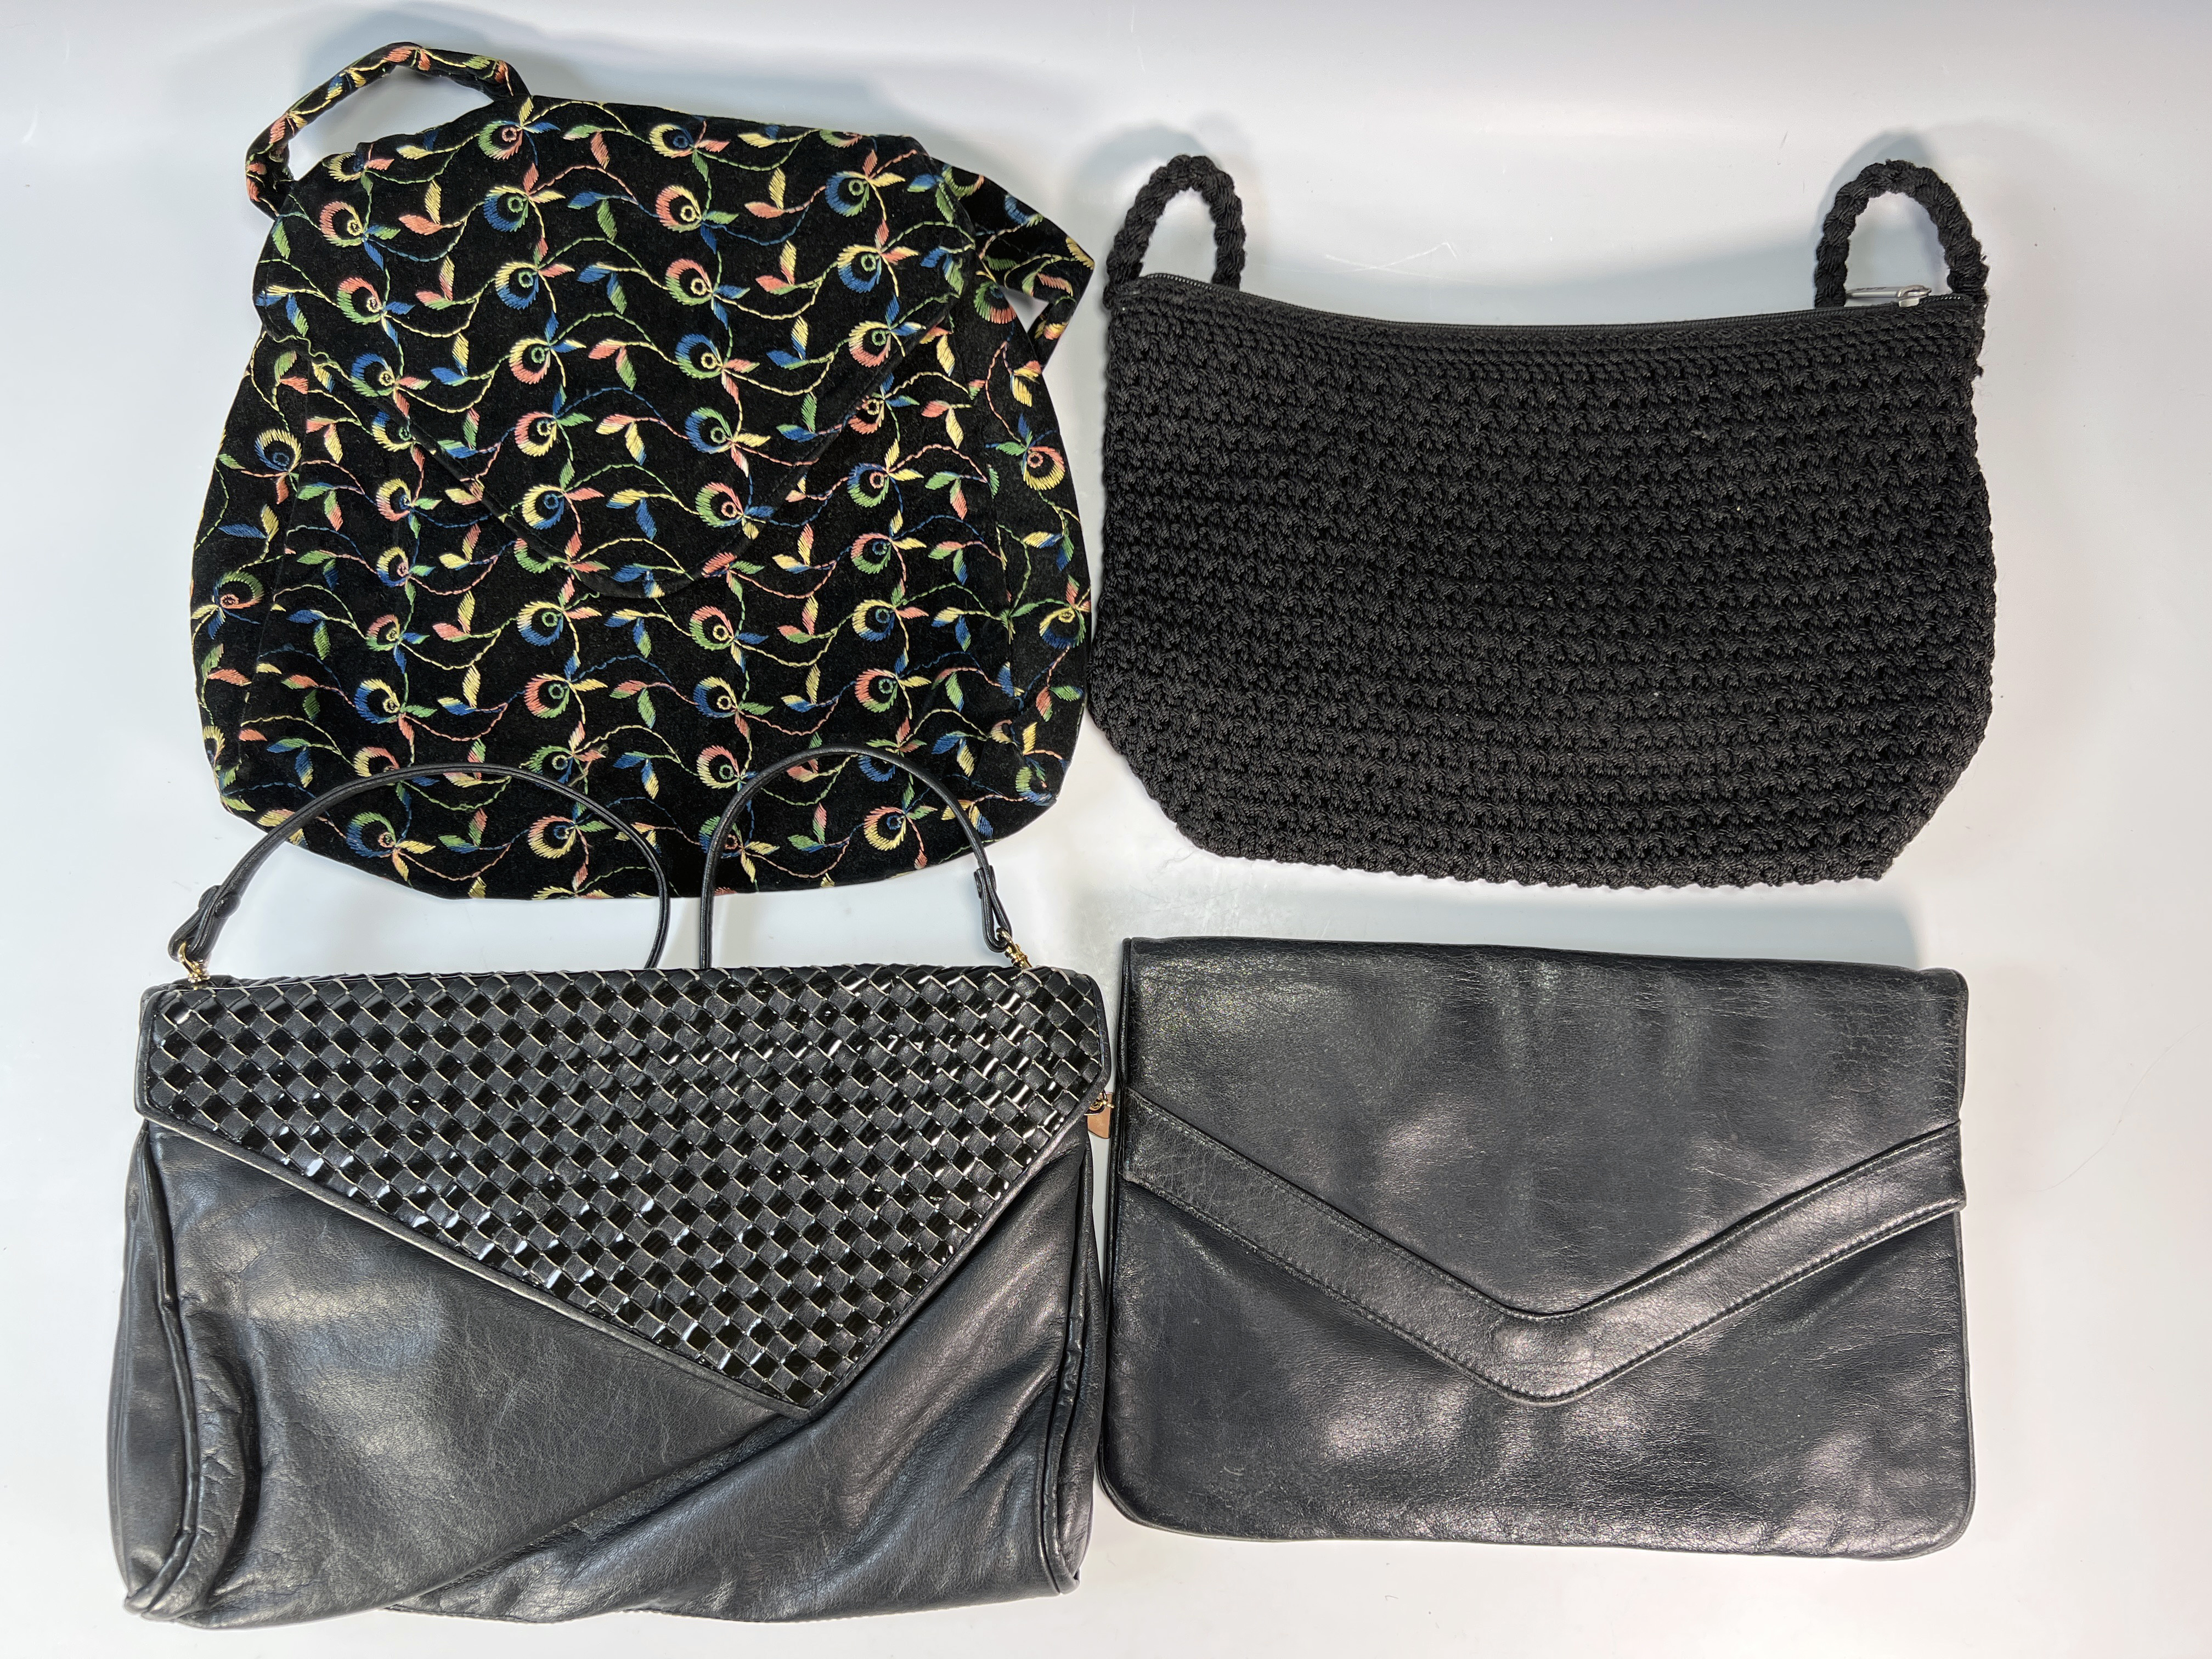 4 Purses, Handbags, Clutches The Sak image 1